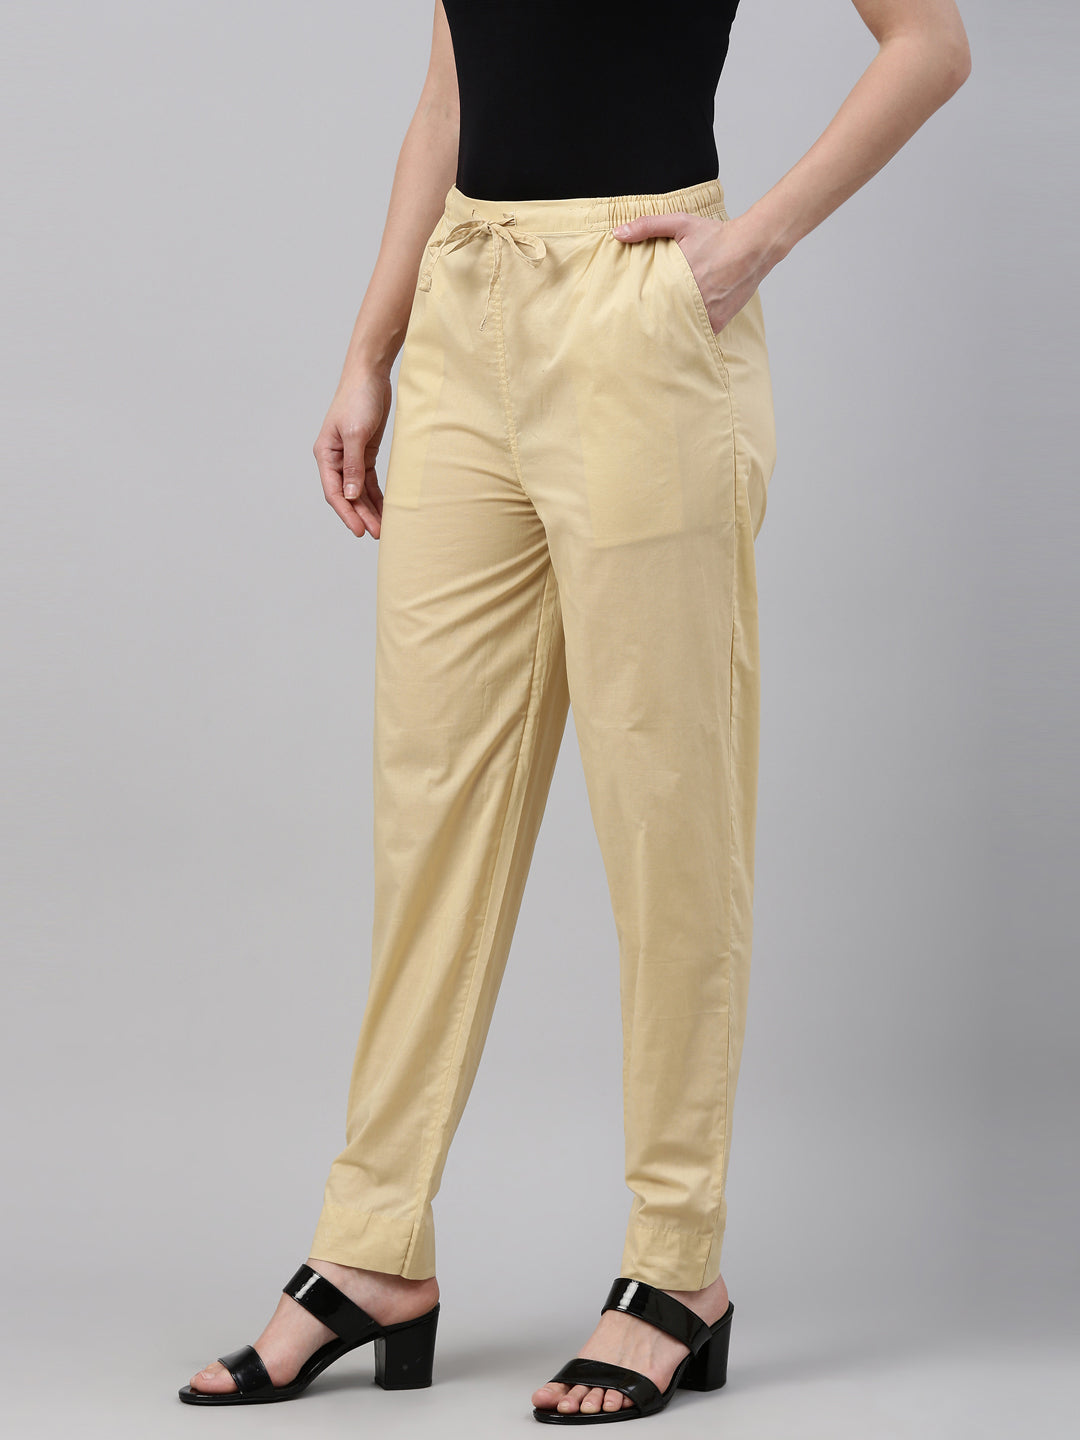 Shally Creations Plain Ladies Mehndi Cotton Pant, Waist Size: 28